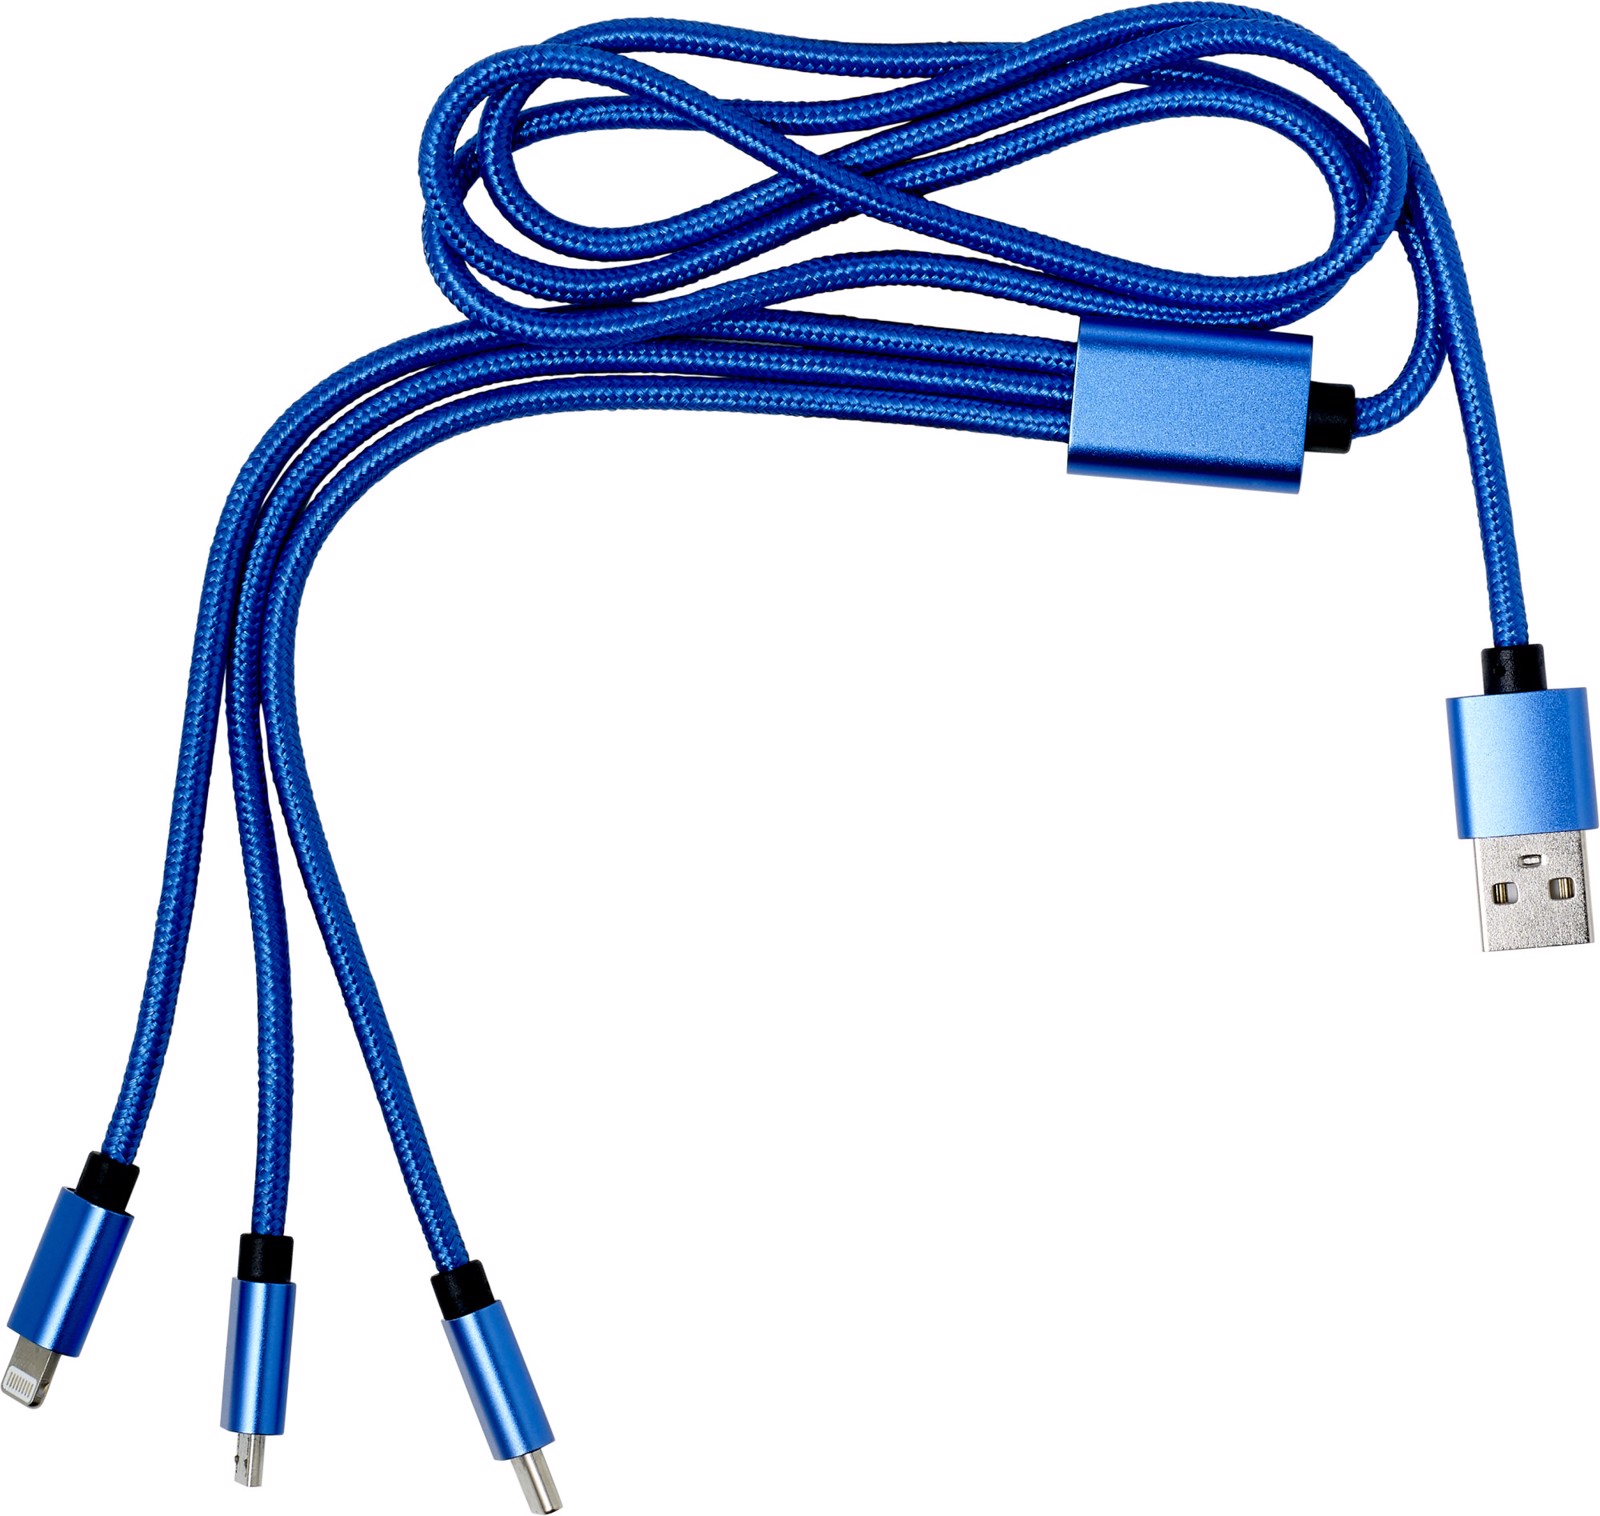 Nylon charging cable - Cobalt Blue